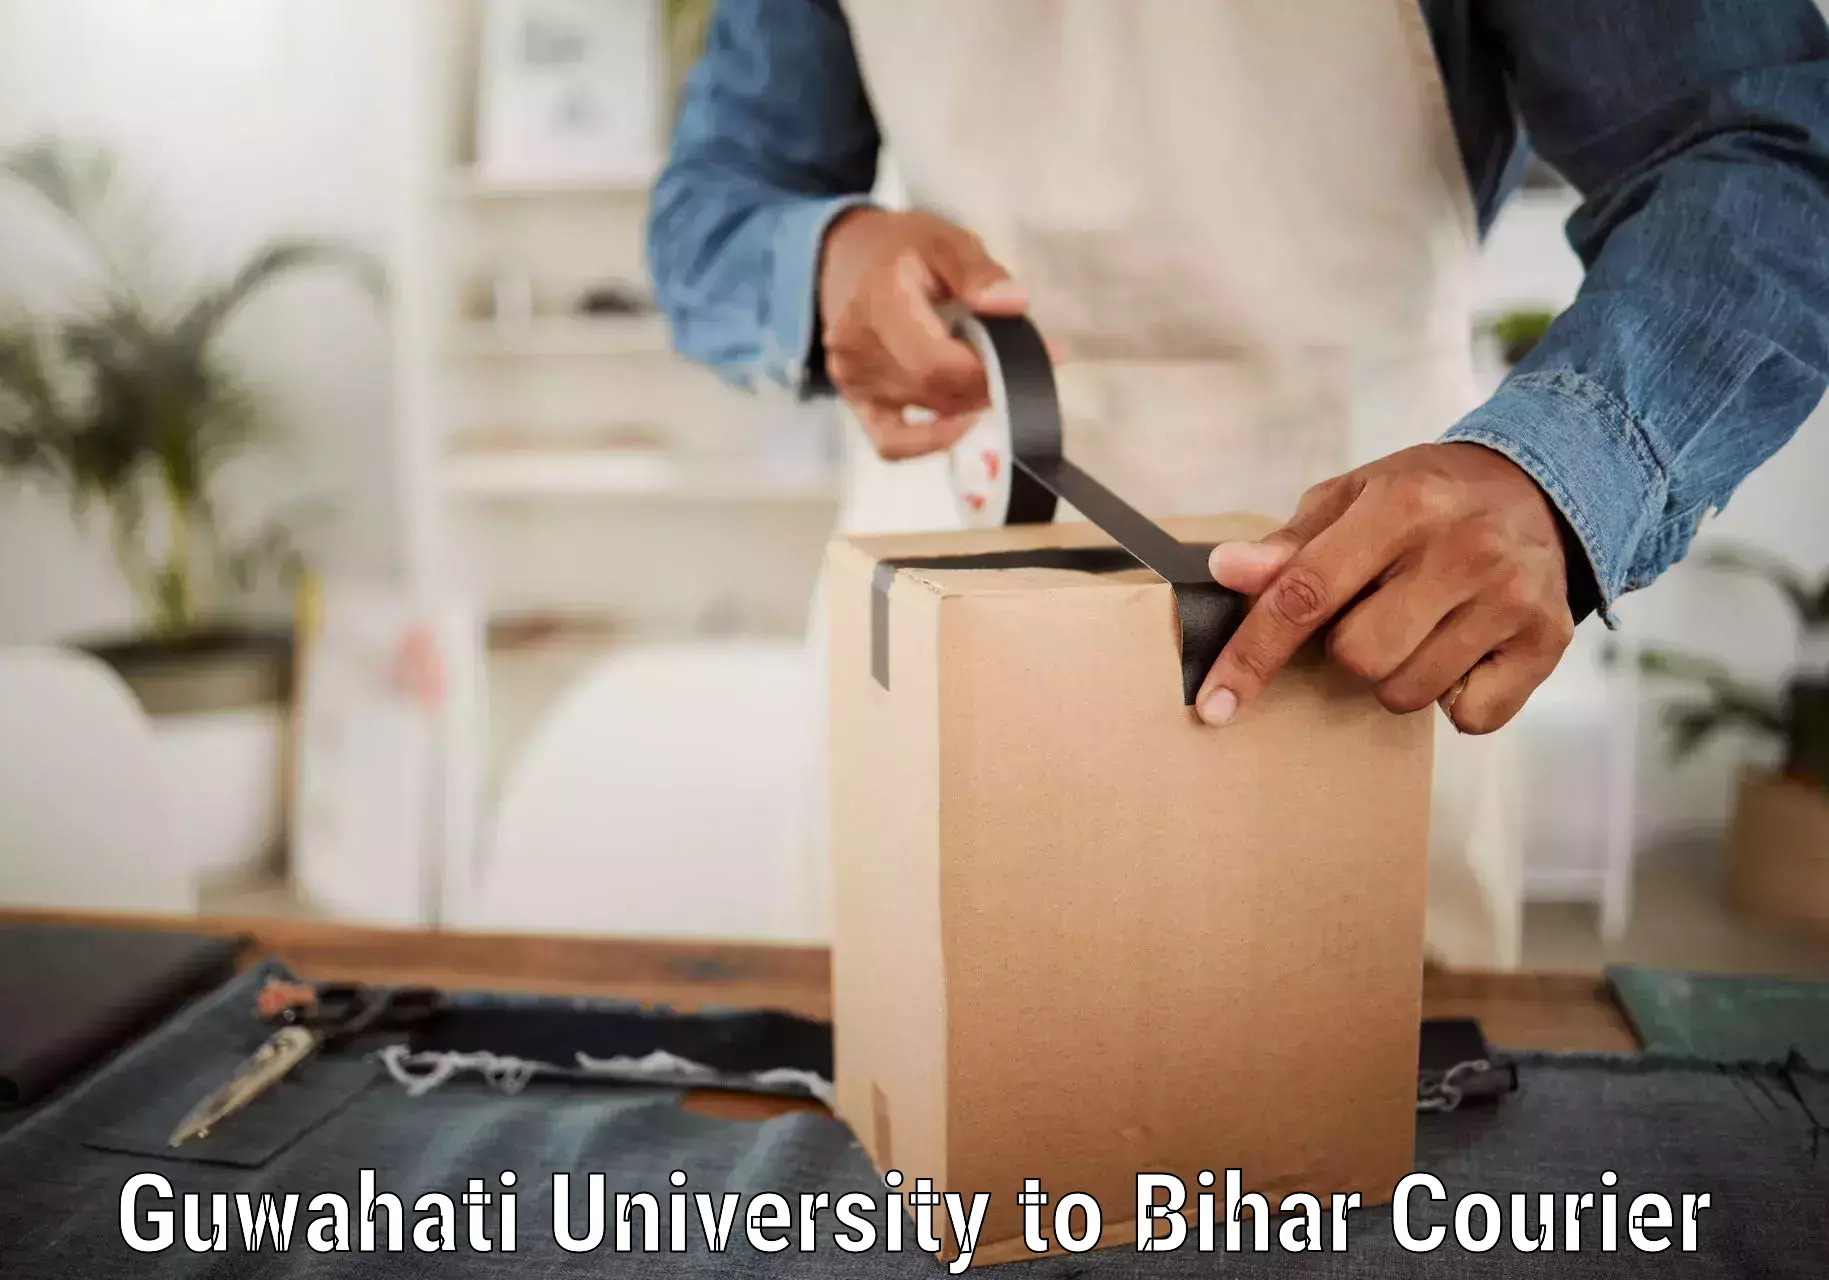 Cash on delivery service Guwahati University to Dumraon